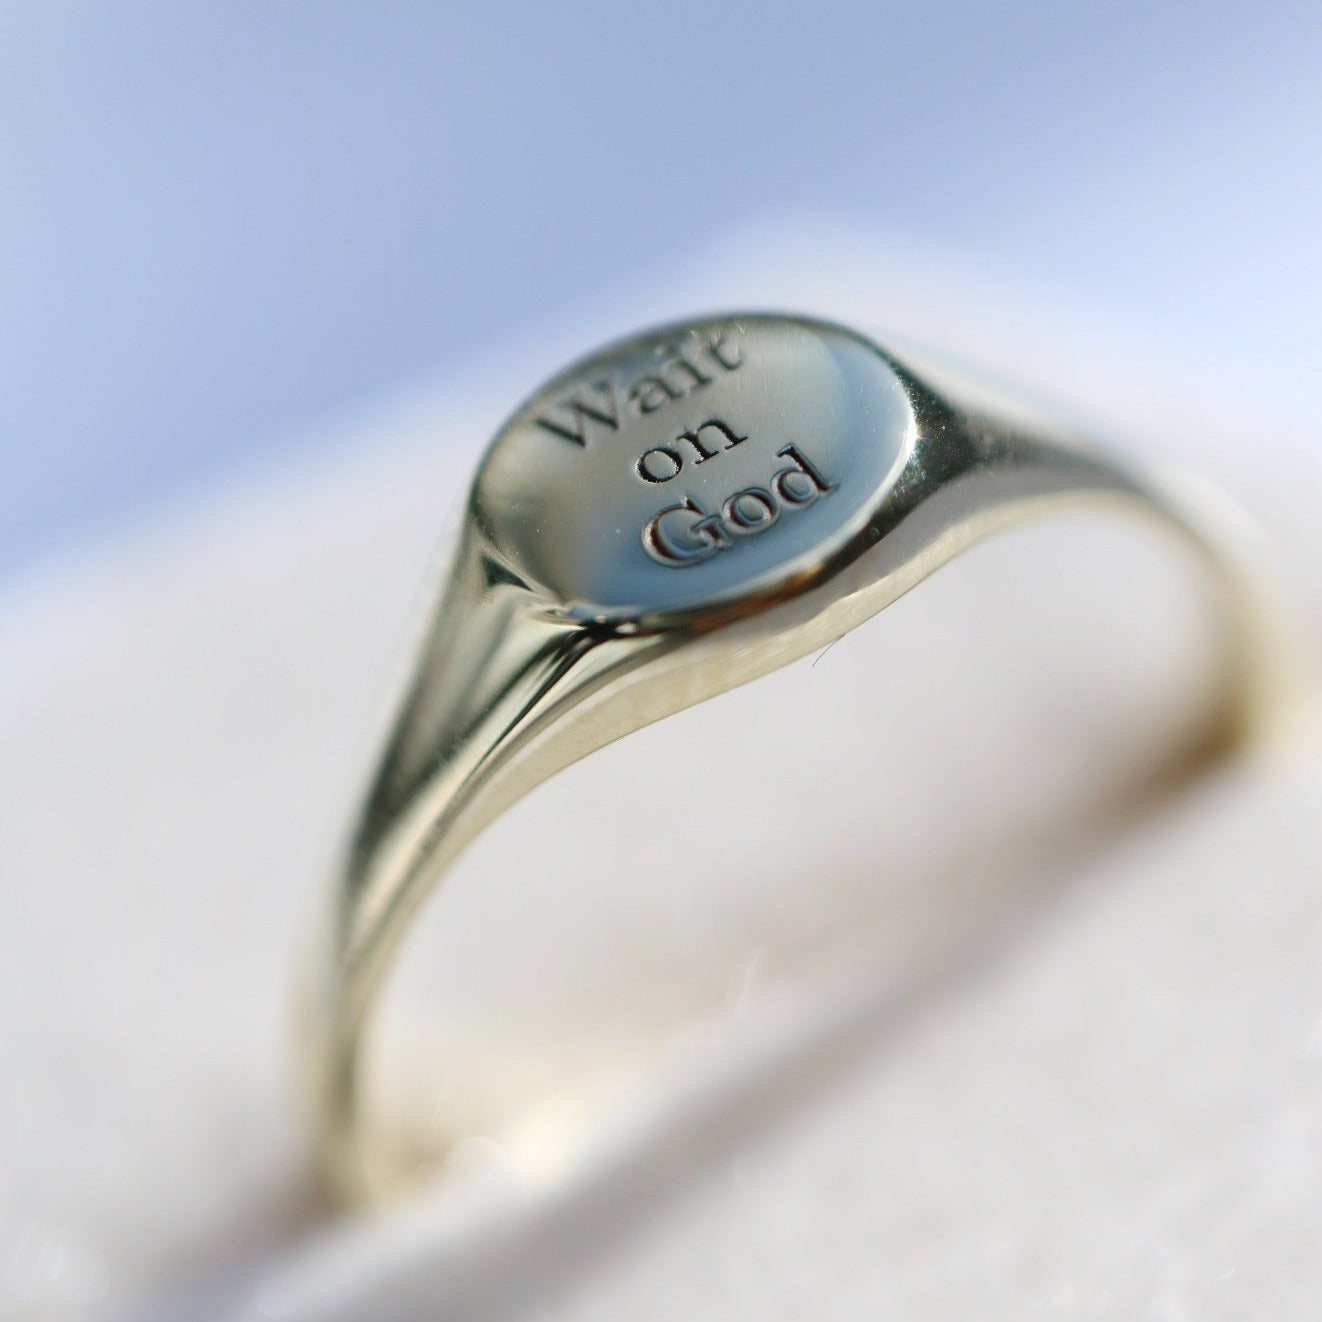 Petite signet ring with engraving